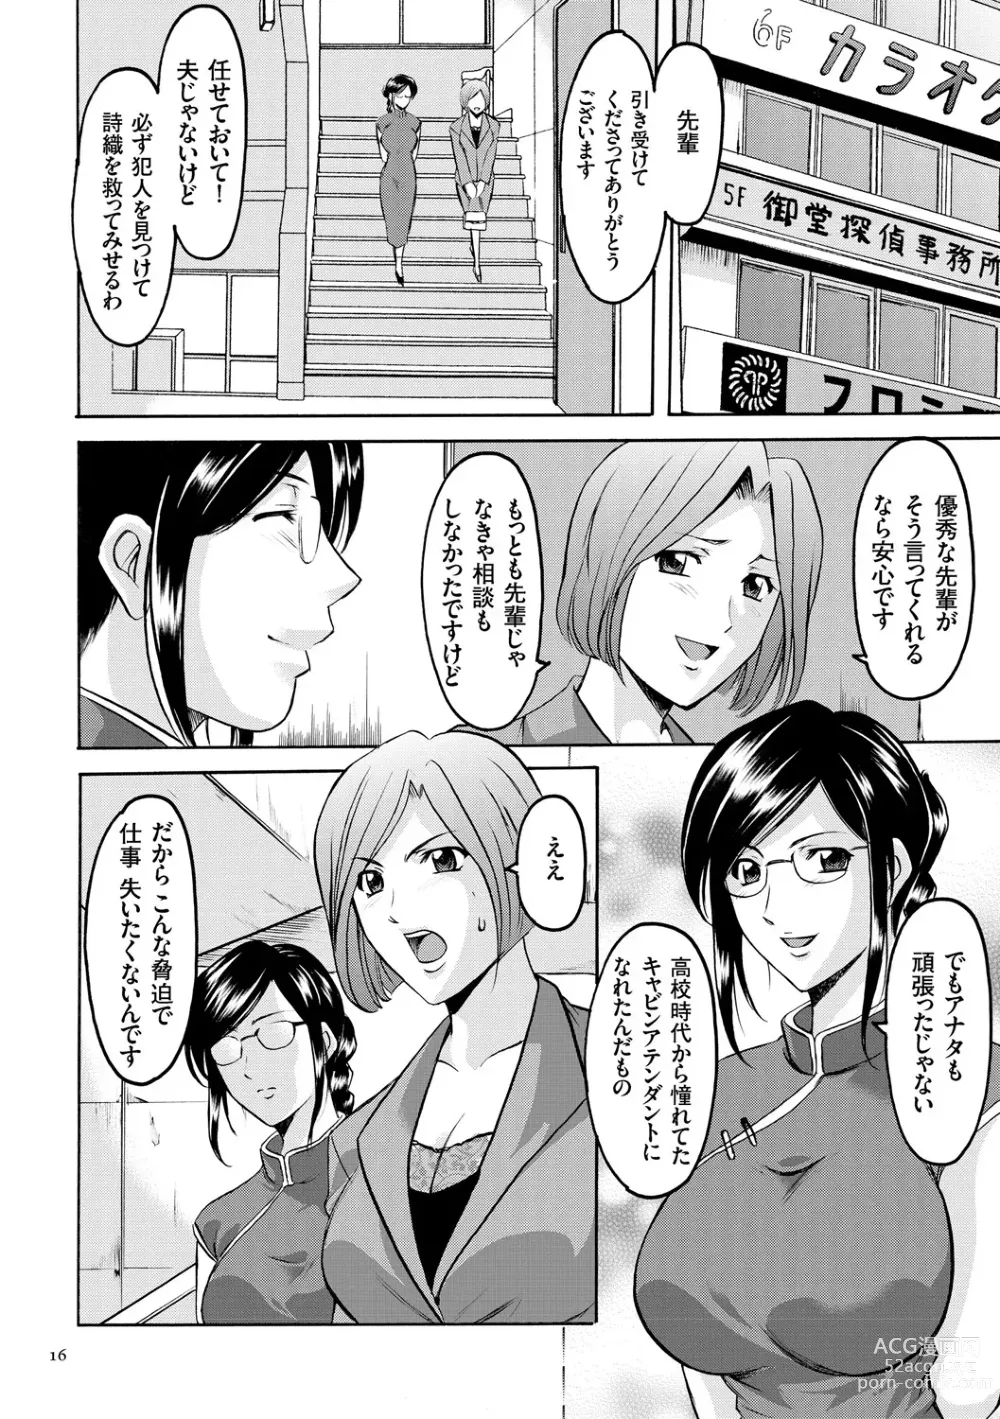 Page 16 of manga Sennyu Tsuma Satomi Kiroku